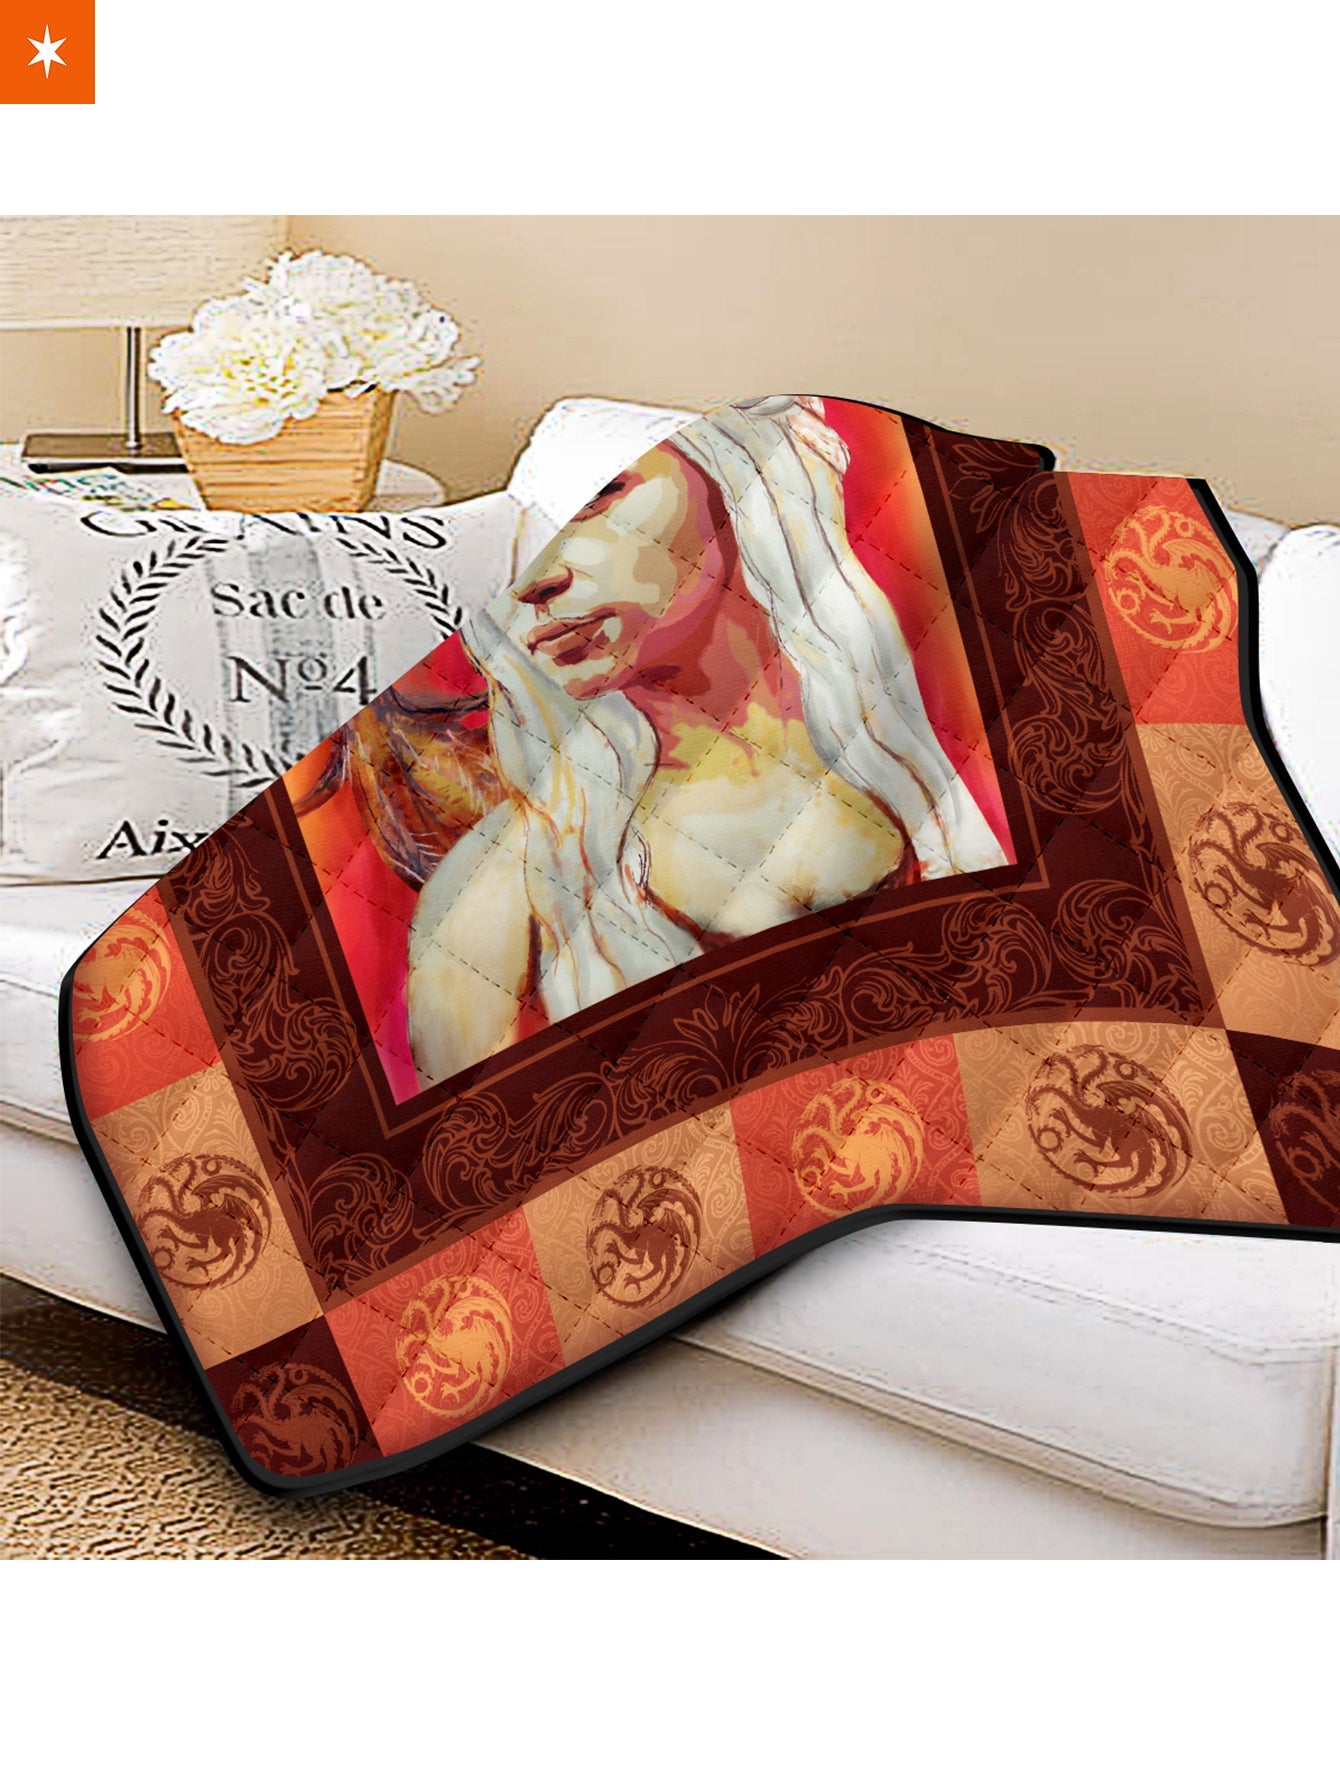 Fandomaniax - Mother of Dragons Quilt Blanket